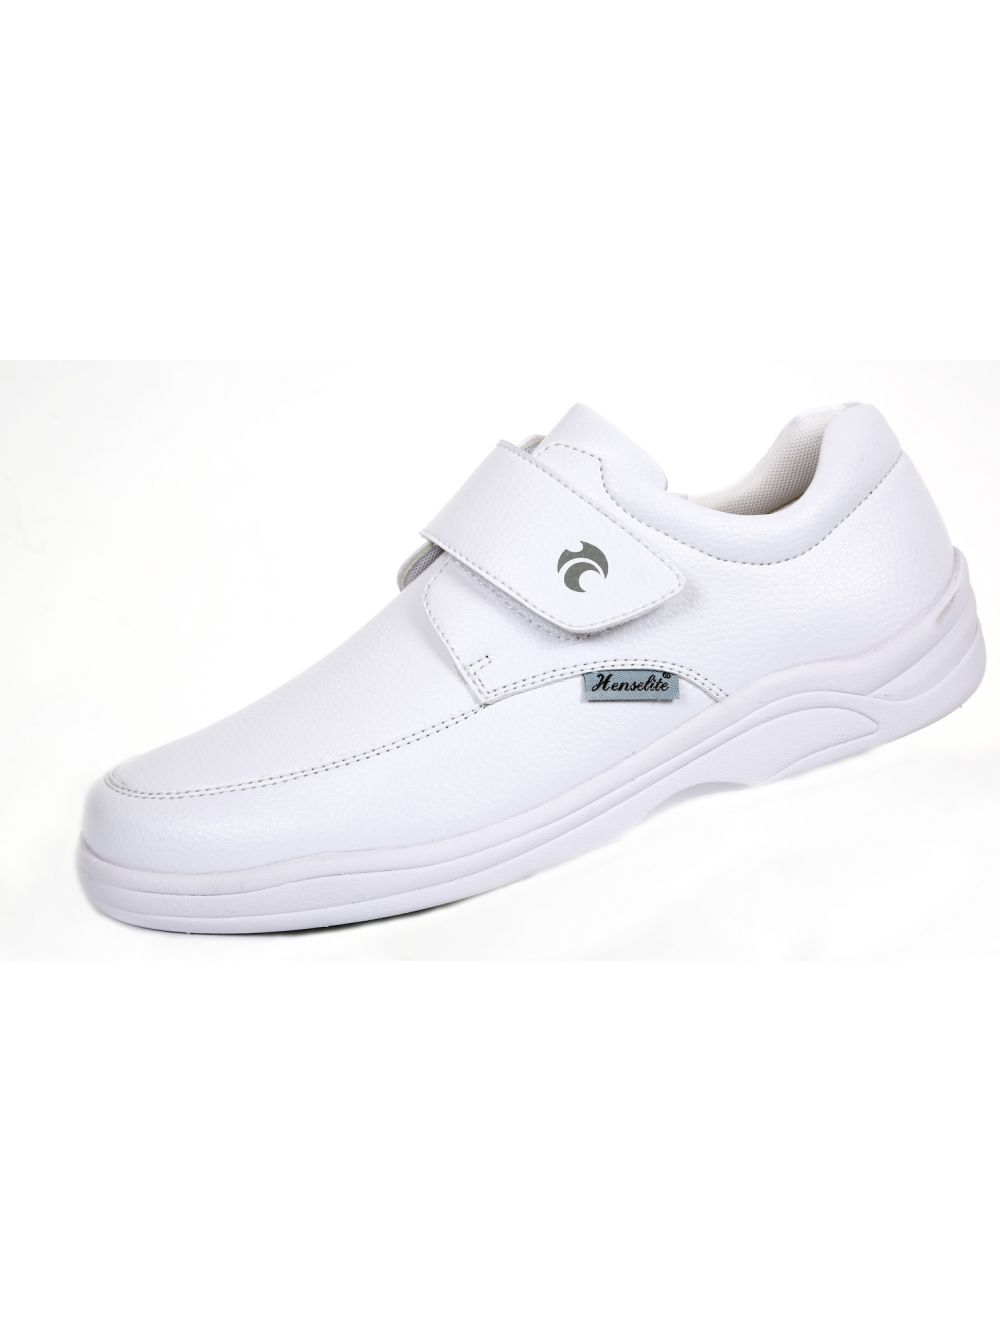 New Balance 575 V2 Mens Size 8.5 (4E) Shoes Walking Comfort Sneaker Extra  Wide | eBay